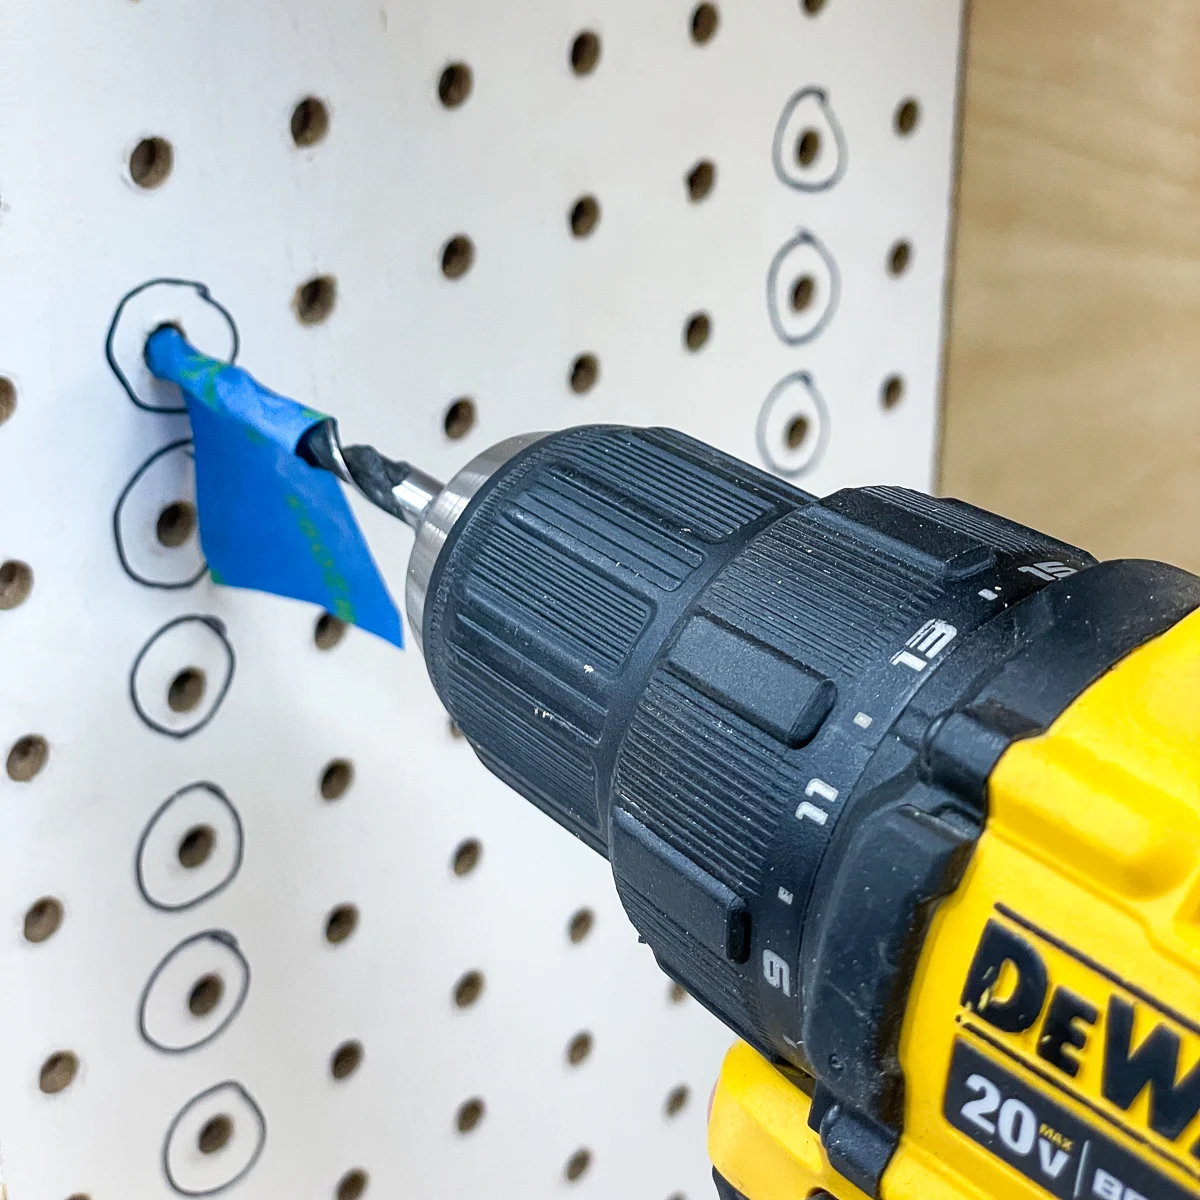 DIY shelf pin jig using pegboard and a drill